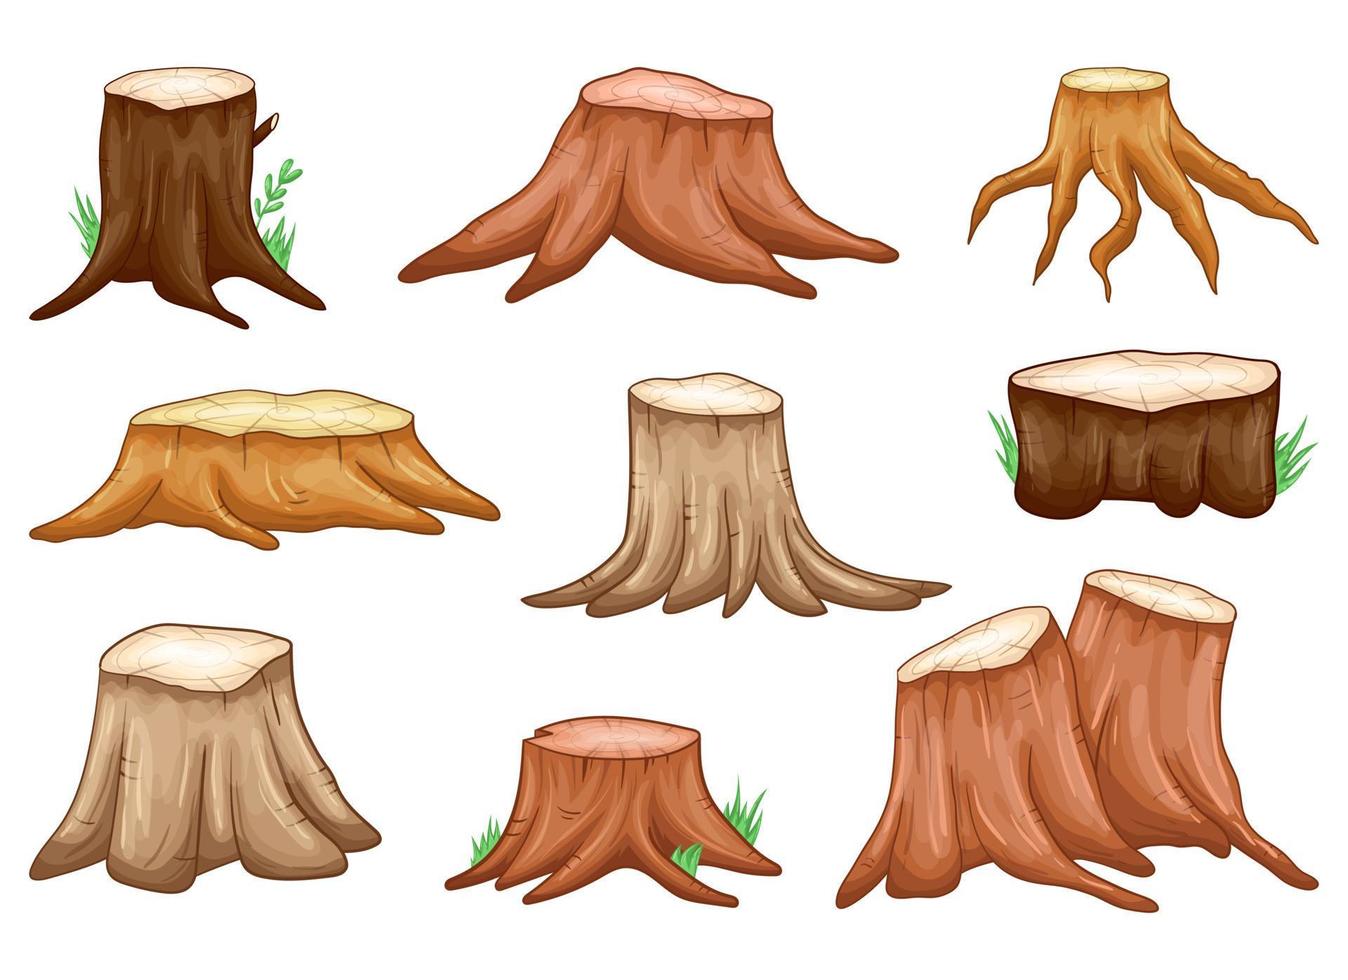 Tree stump vector design illustration isolated on white background